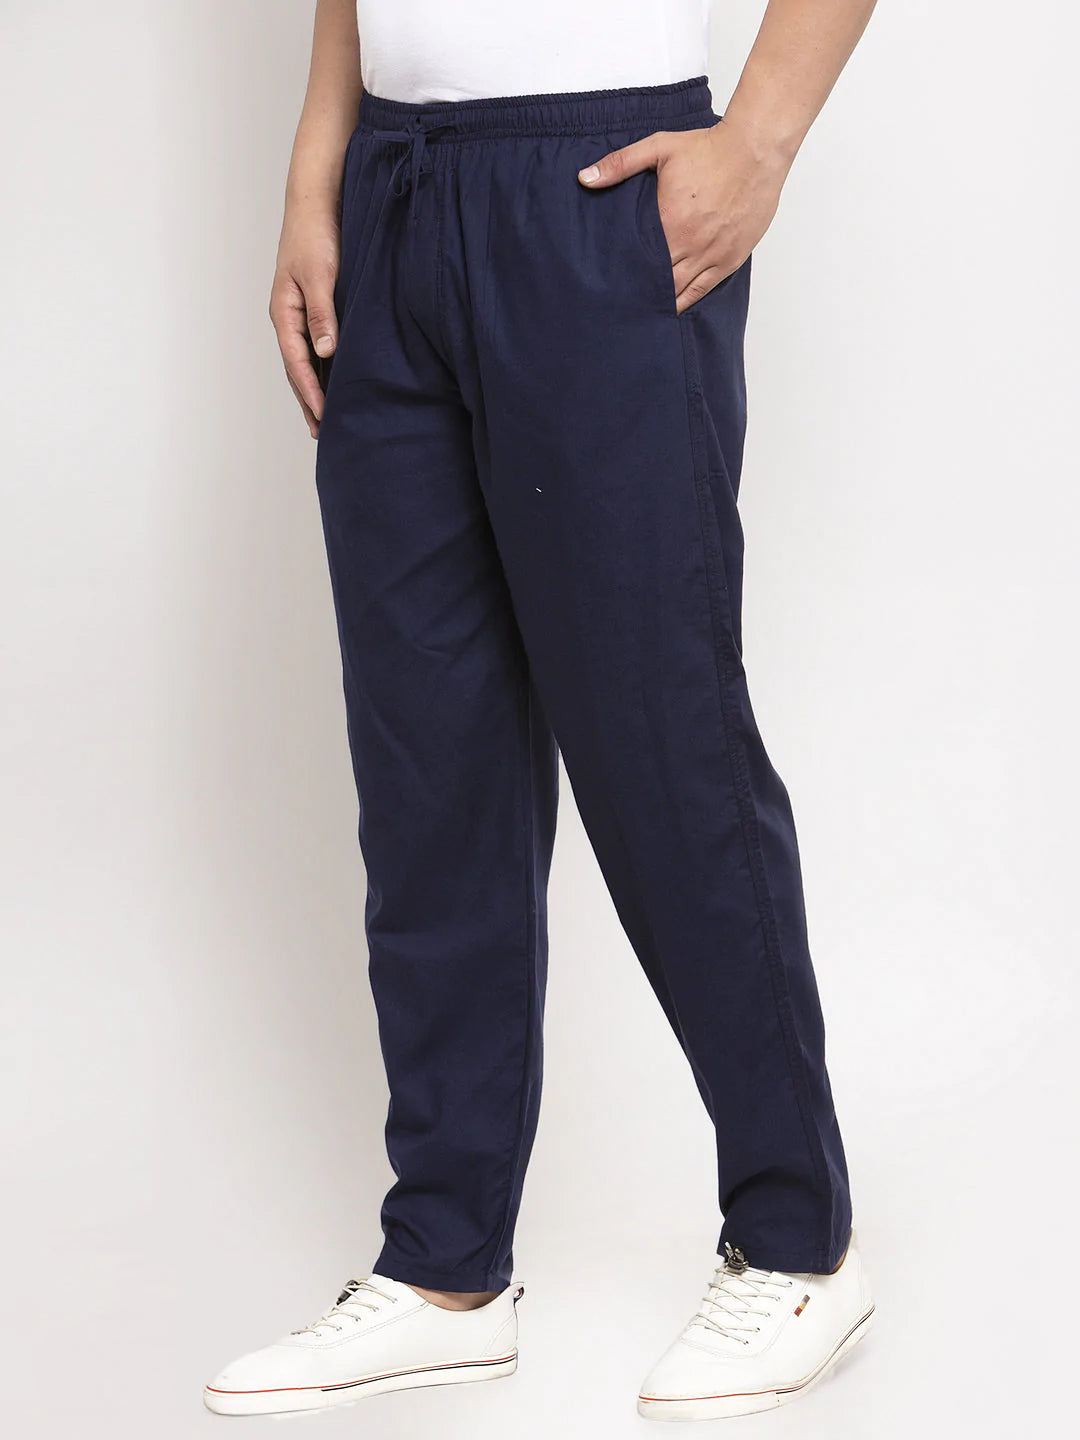 Jainish Men's Navy Blue Solid Cotton Track Pants ( JOG 011Navy )